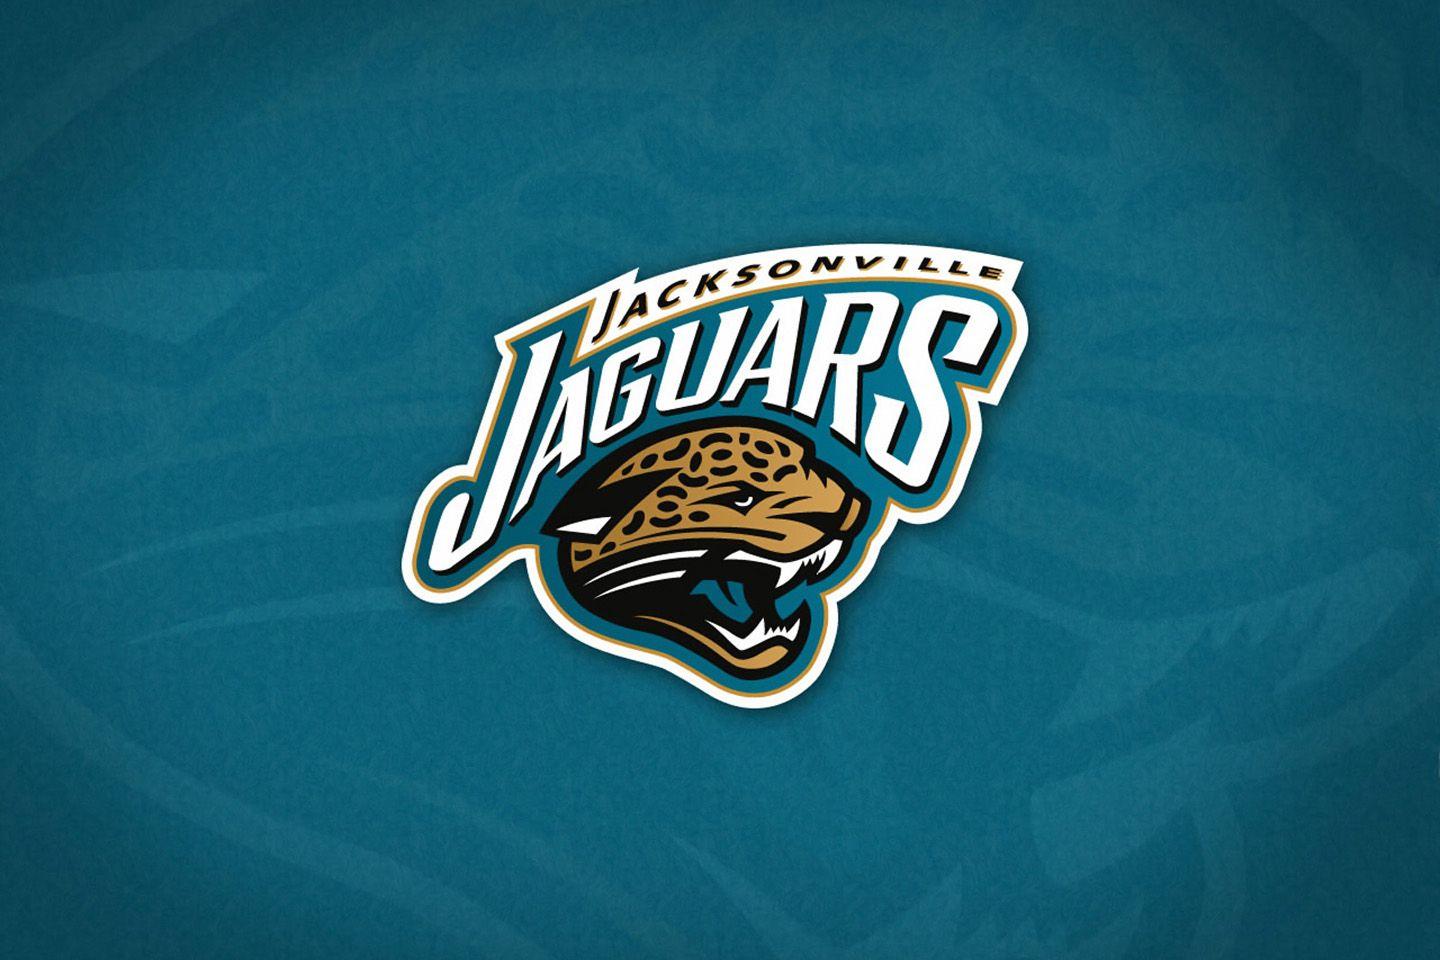 NFL Logo Jacksonville Jaguars Team wallpaper 2018 in Football